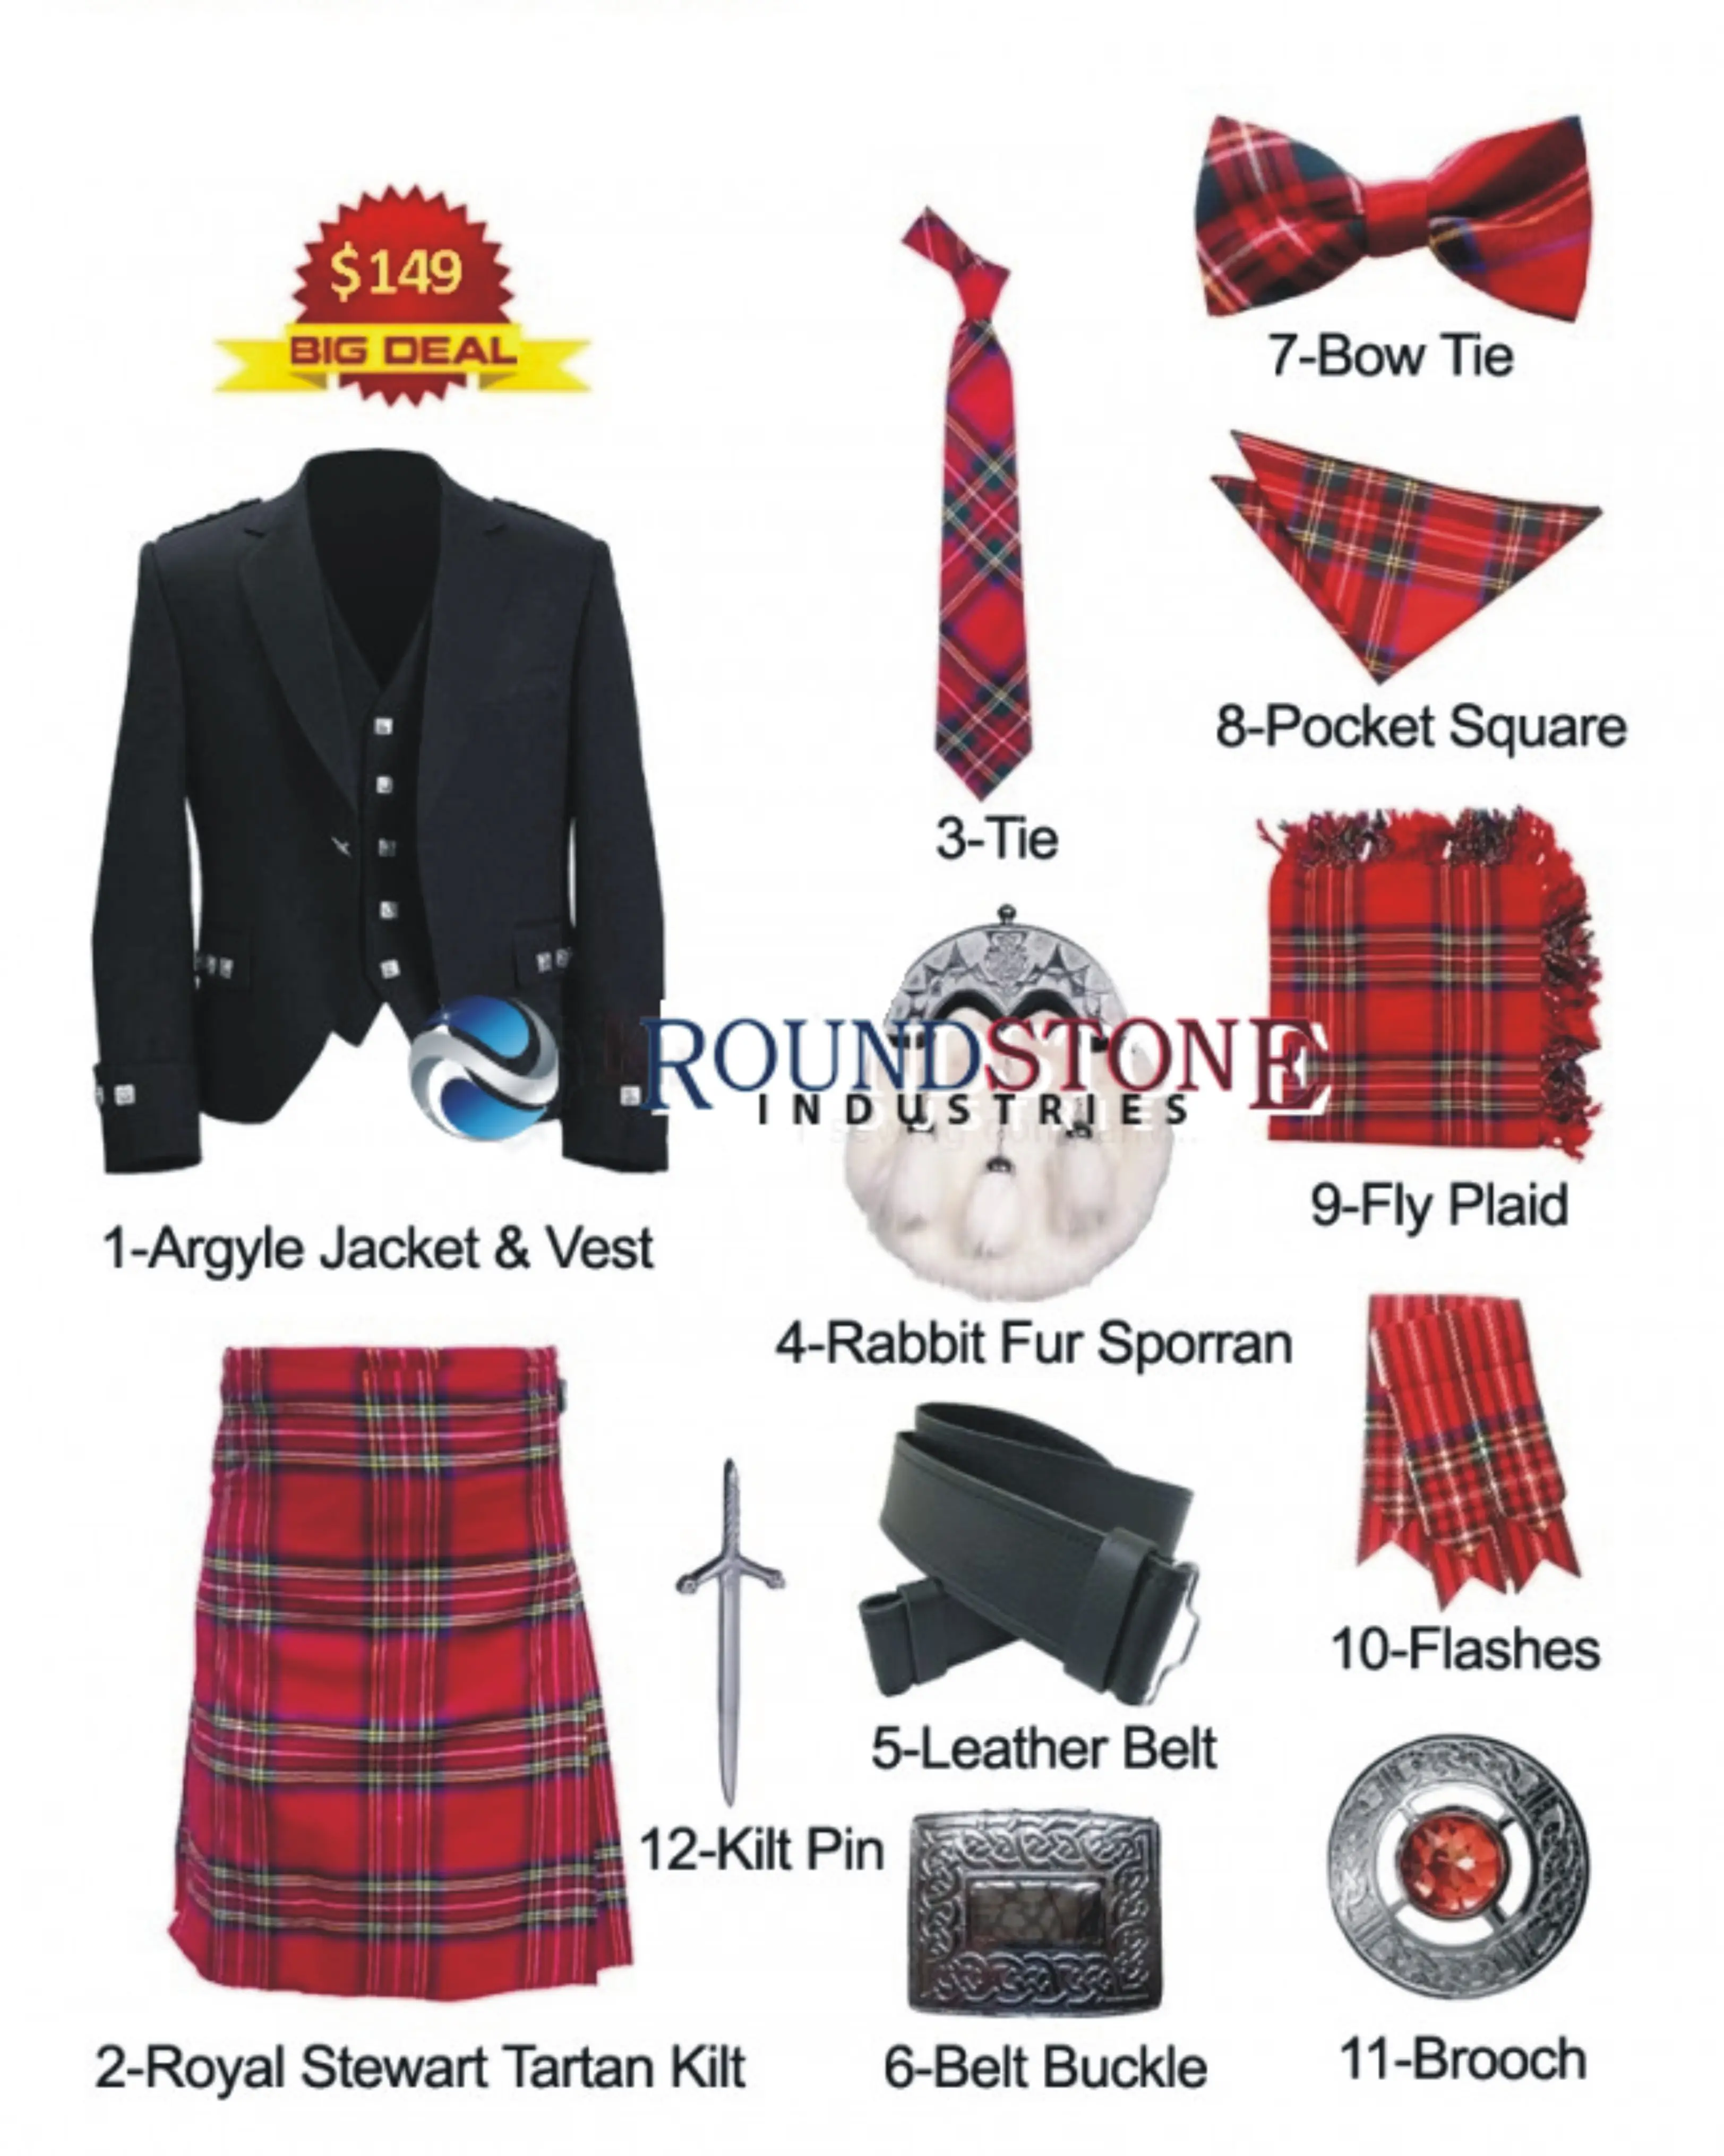 İskoç kraliyet Stewart Tartan Kilt kıyafet anlaşma aksesuarları Argyle ceket Vest_Kilt _ Flashes_Bow Tie_Fly Plaid_Sporran